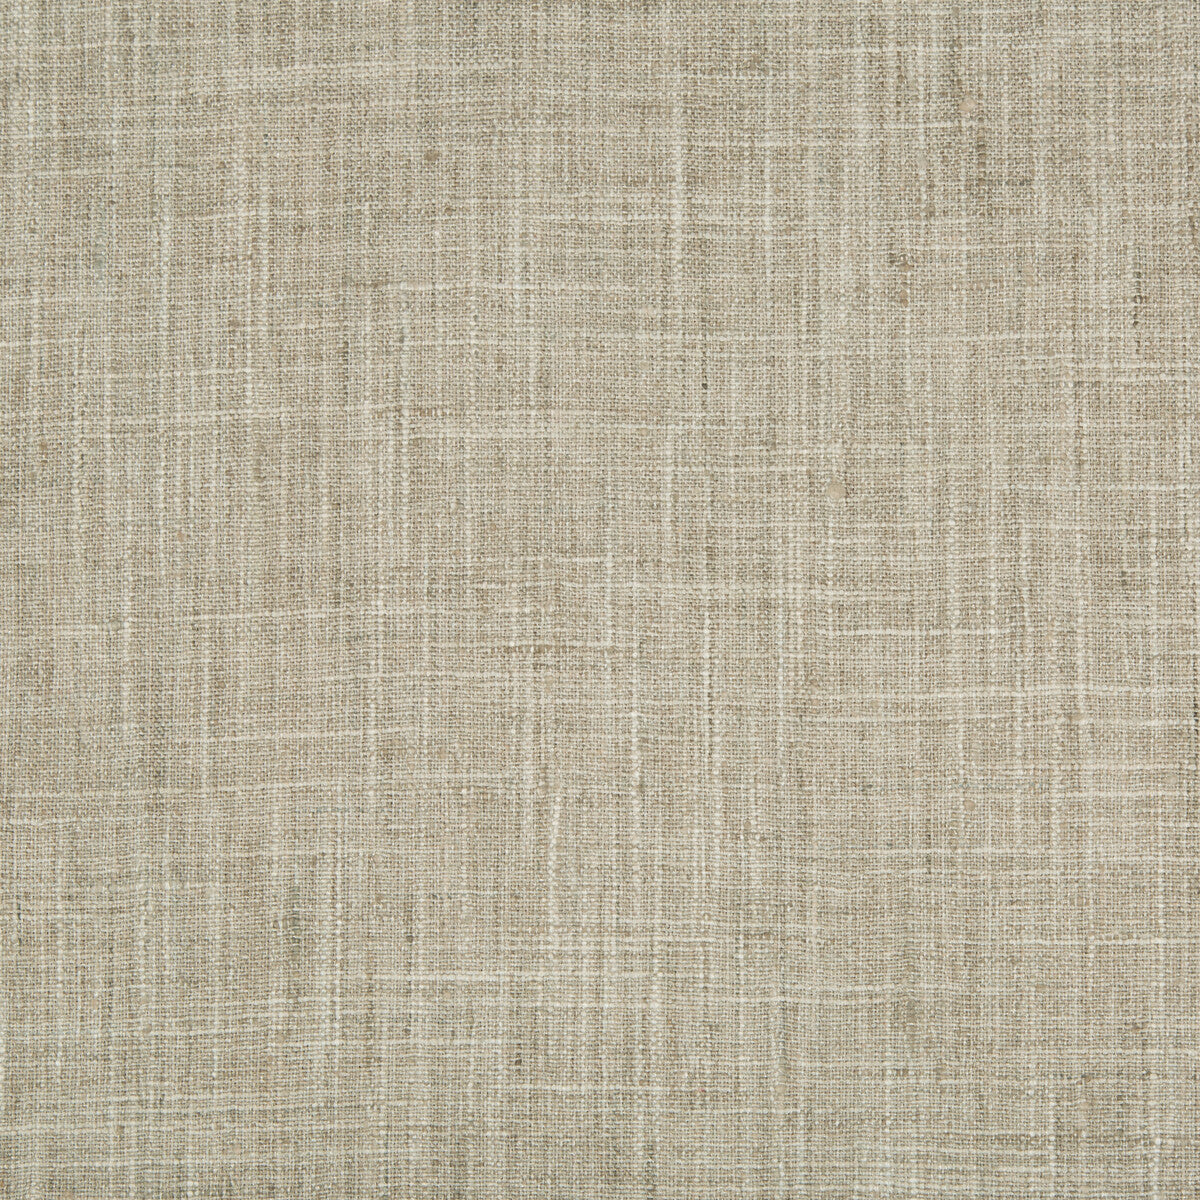 Kravet Smart fabric in 34983-1121 color - pattern 34983.1121.0 - by Kravet Smart